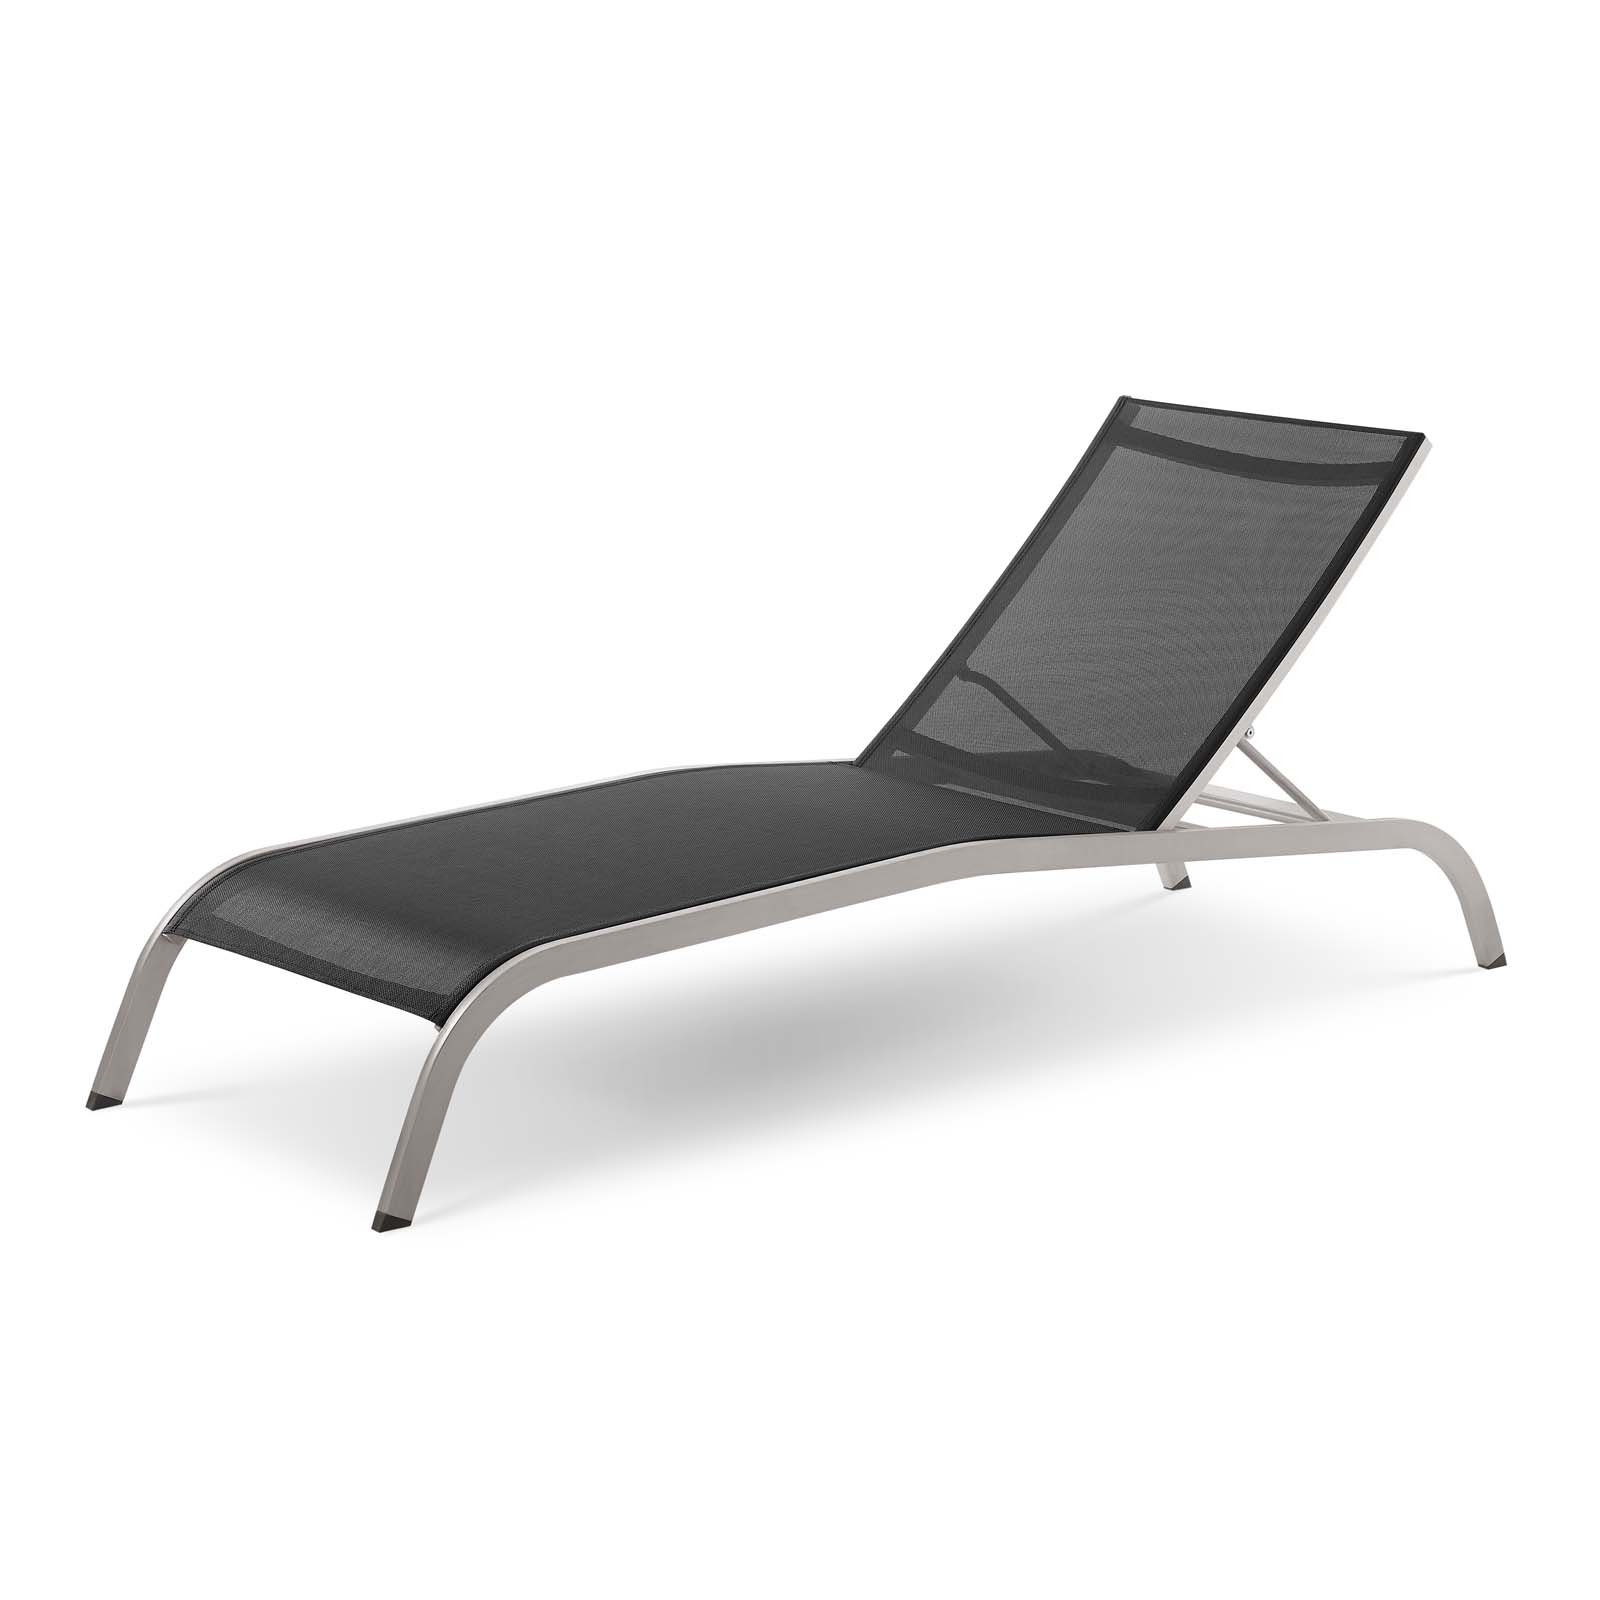 Contemporary Modern Urban Designer Outdoor Patio Balcony Garden Furniture Lounge Lounge Chair, Aluminum, Black - image 1 of 6